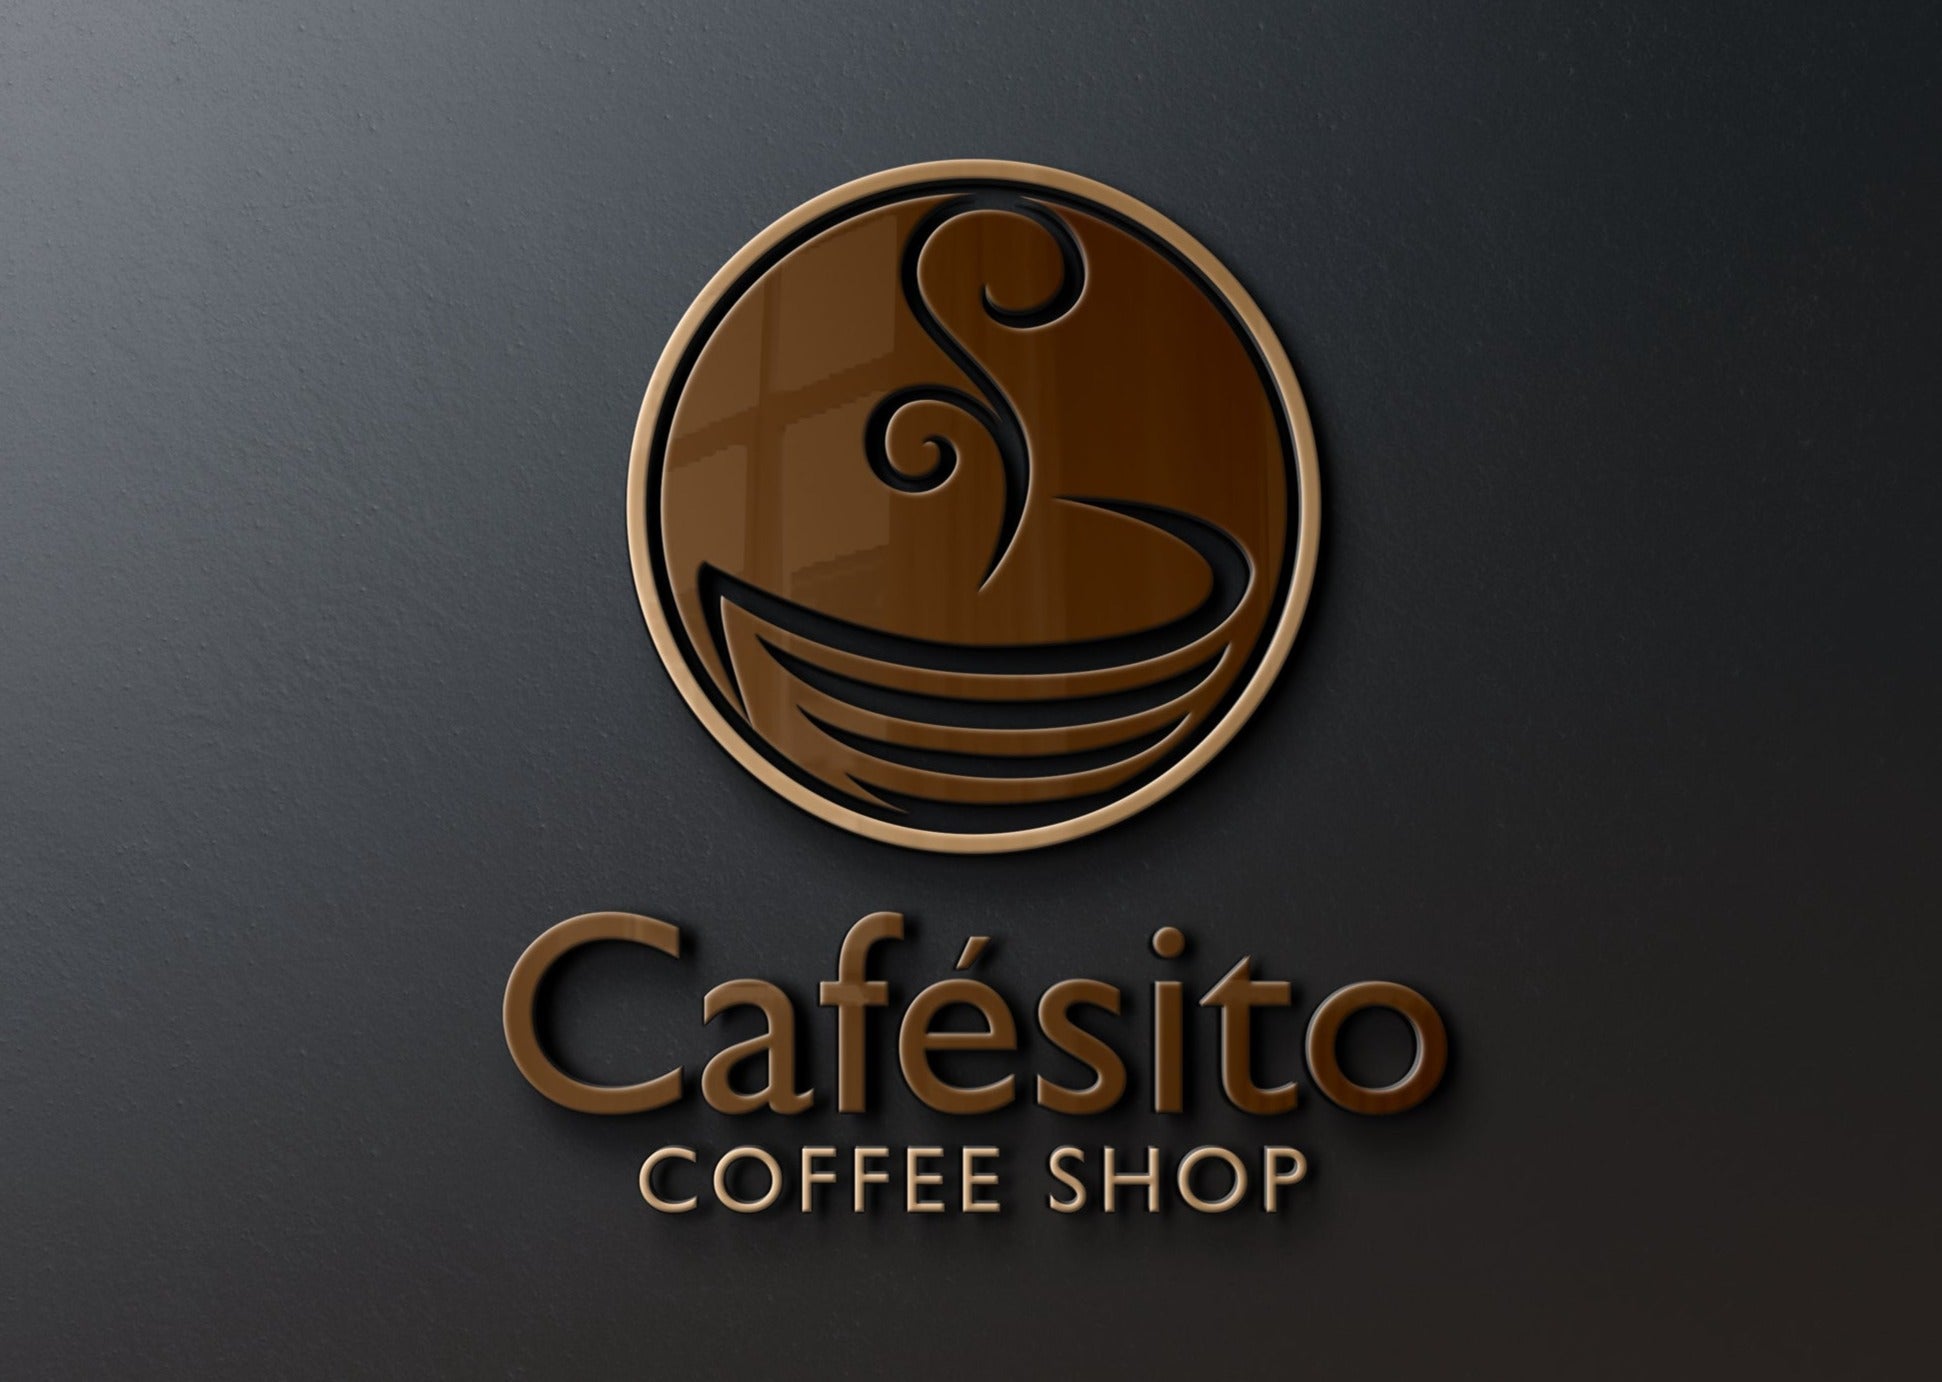 Logo Design - Coffee Shop | Cafe Shop | Coffee Cup | Cafe | Coffee Brand | Coffee Design